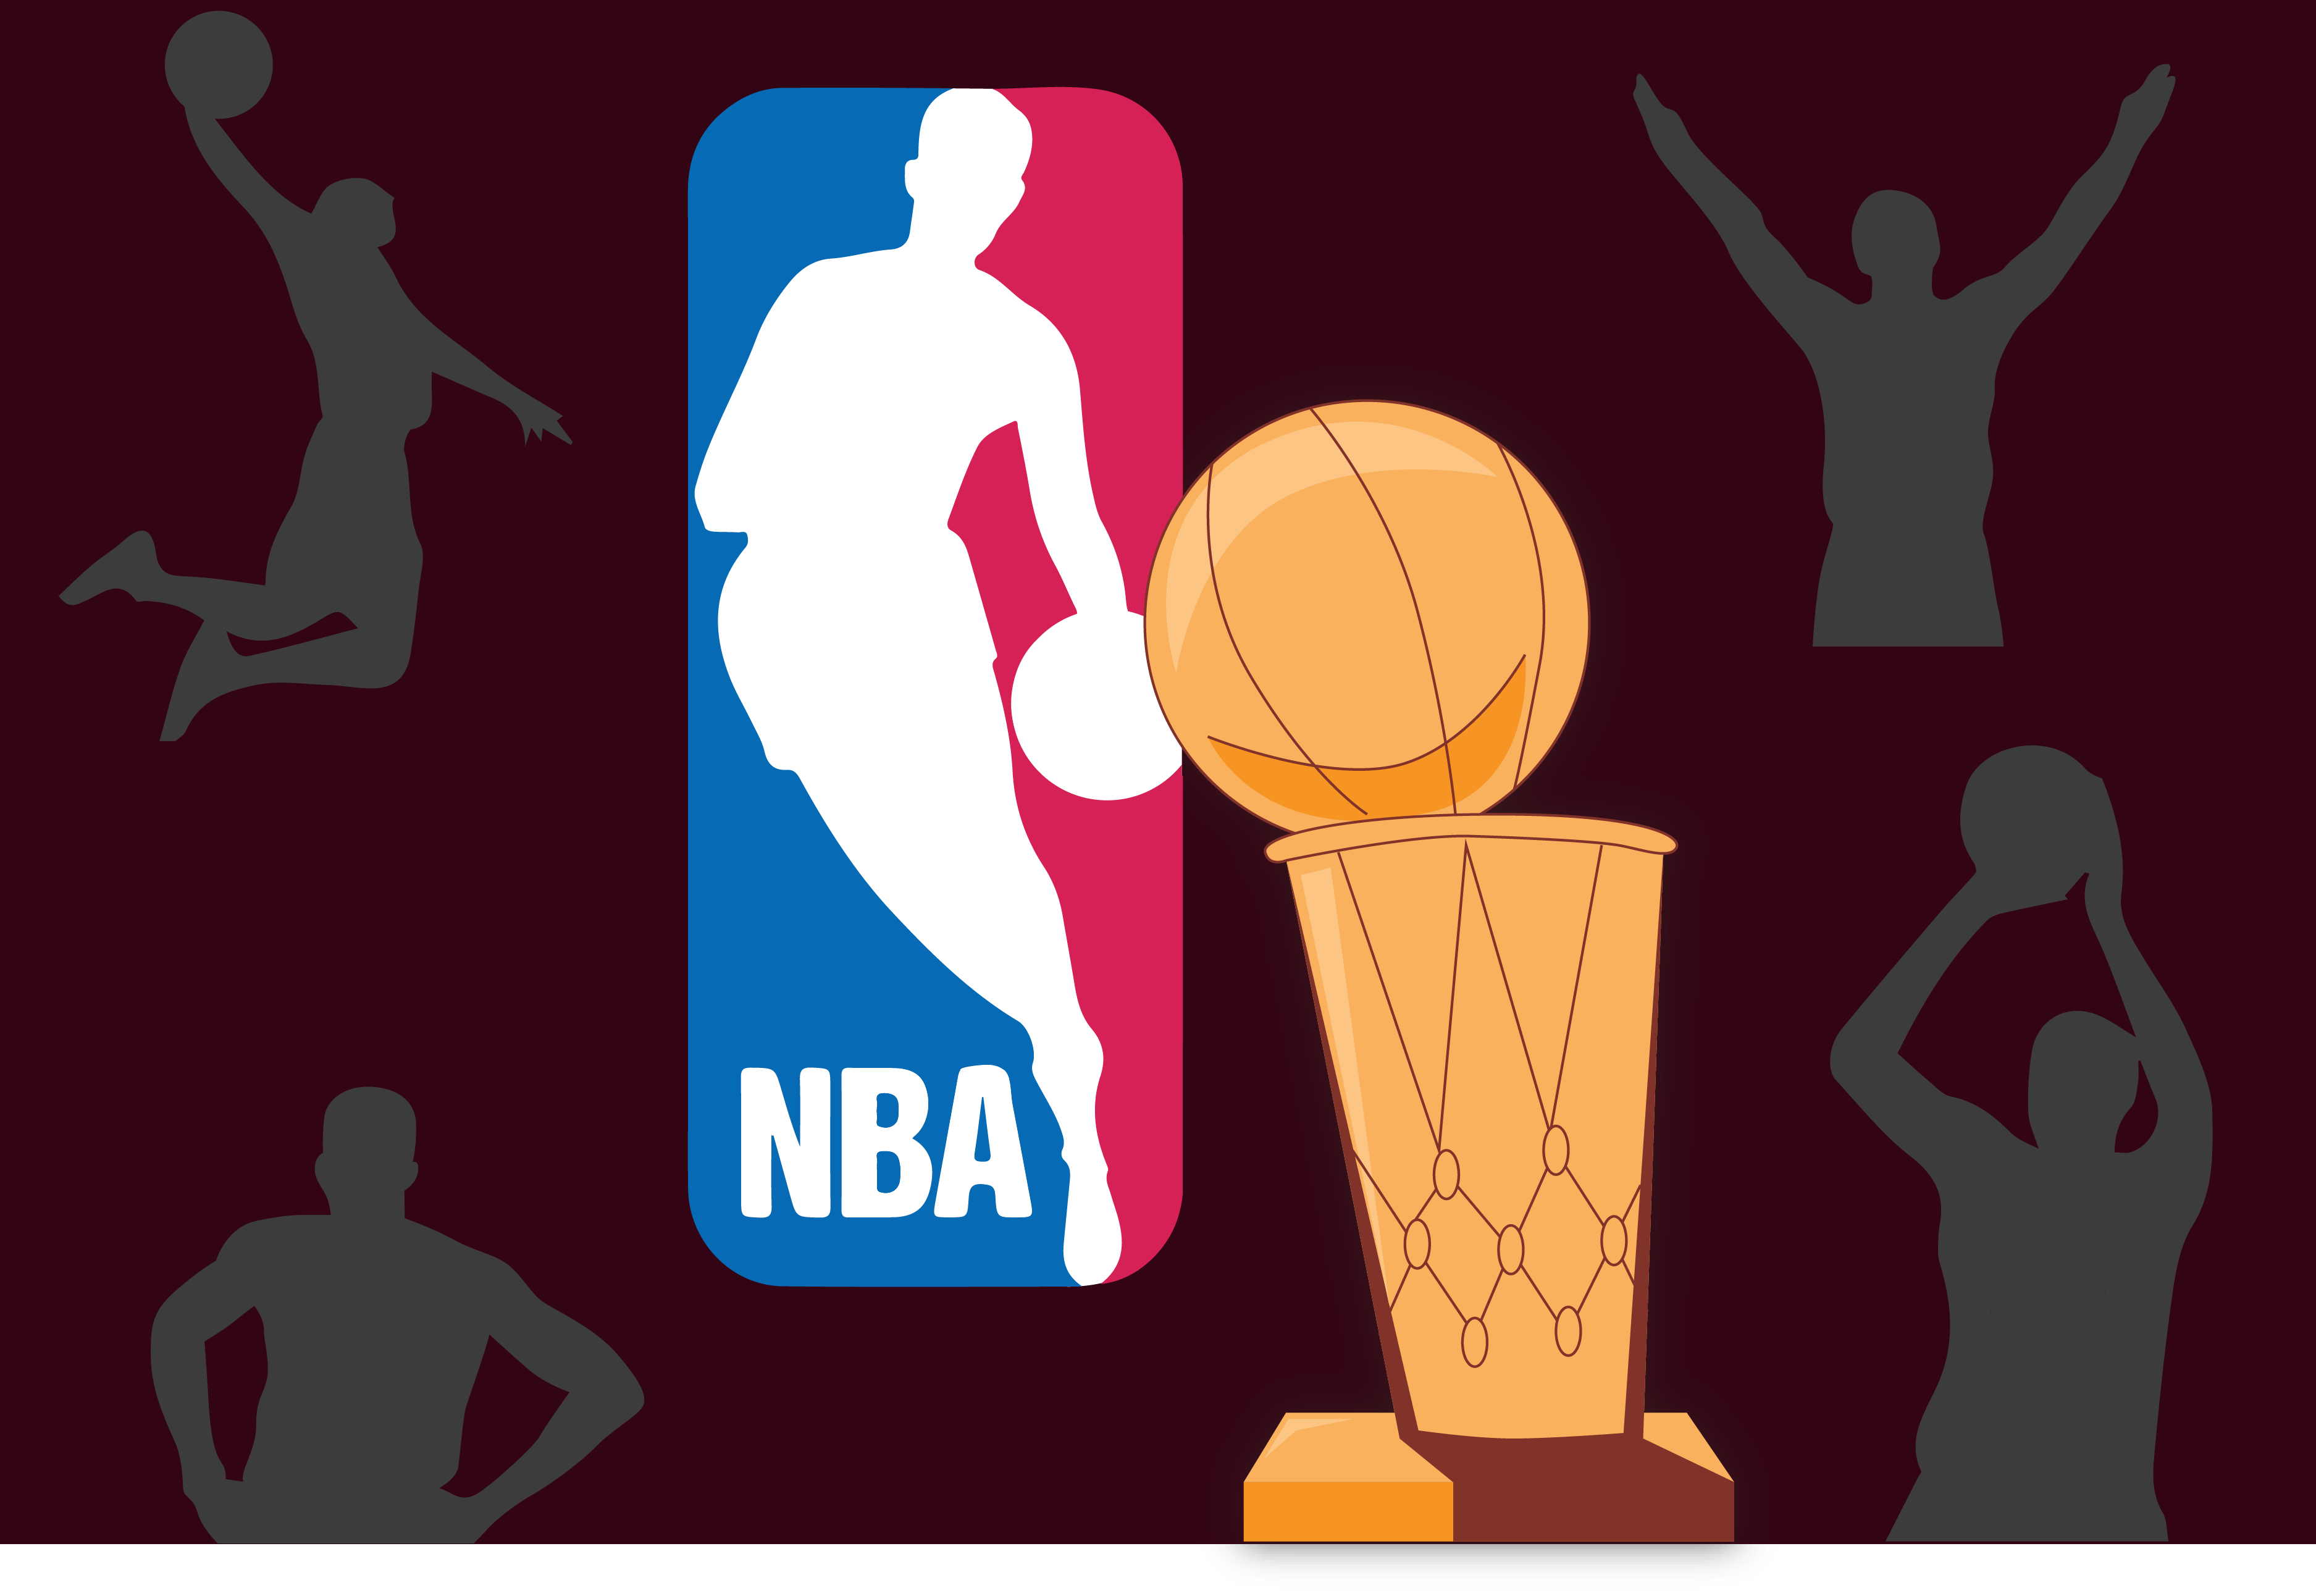 NBA logo with NBA award in foreground